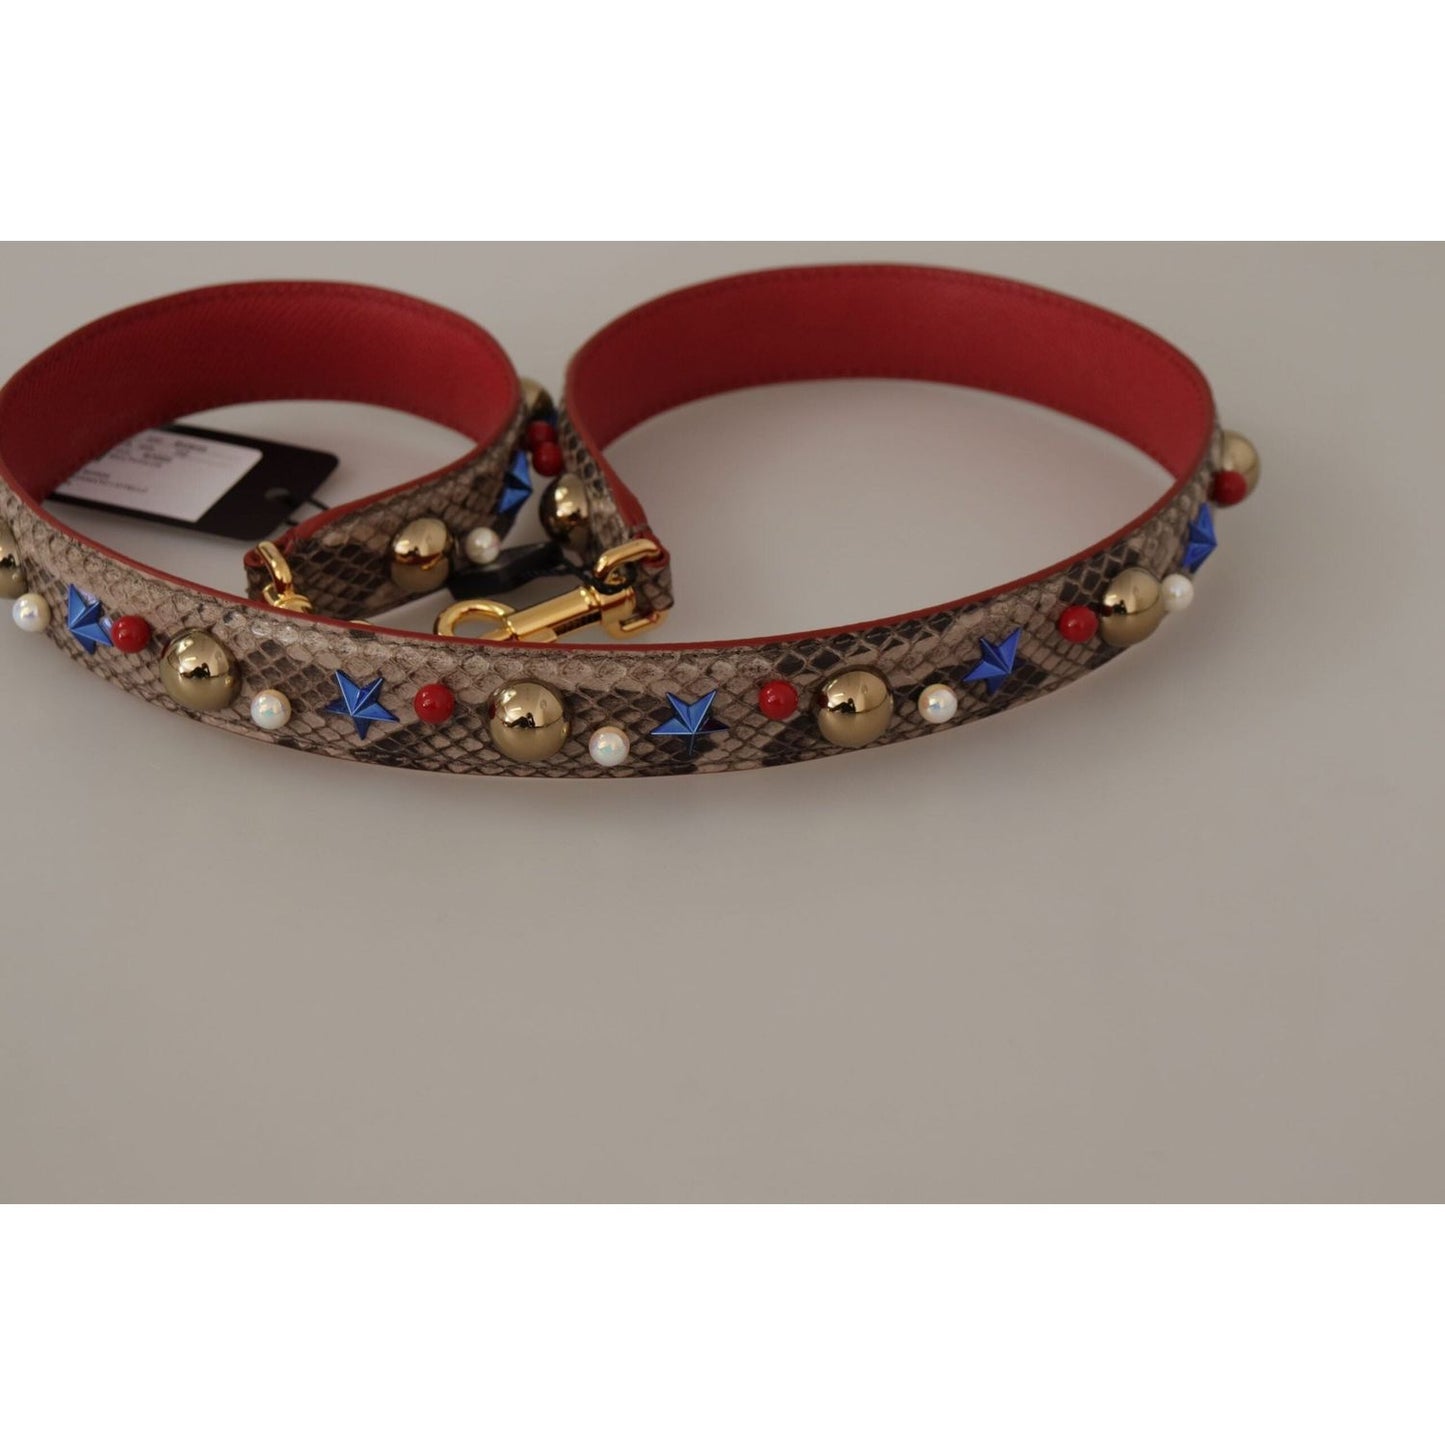 Dolce & Gabbana Elegant Python Leather Shoulder Strap brown-python-leather-studded-shoulder-strap IMG_9873-1-scaled-1f56b8d9-59e.jpg